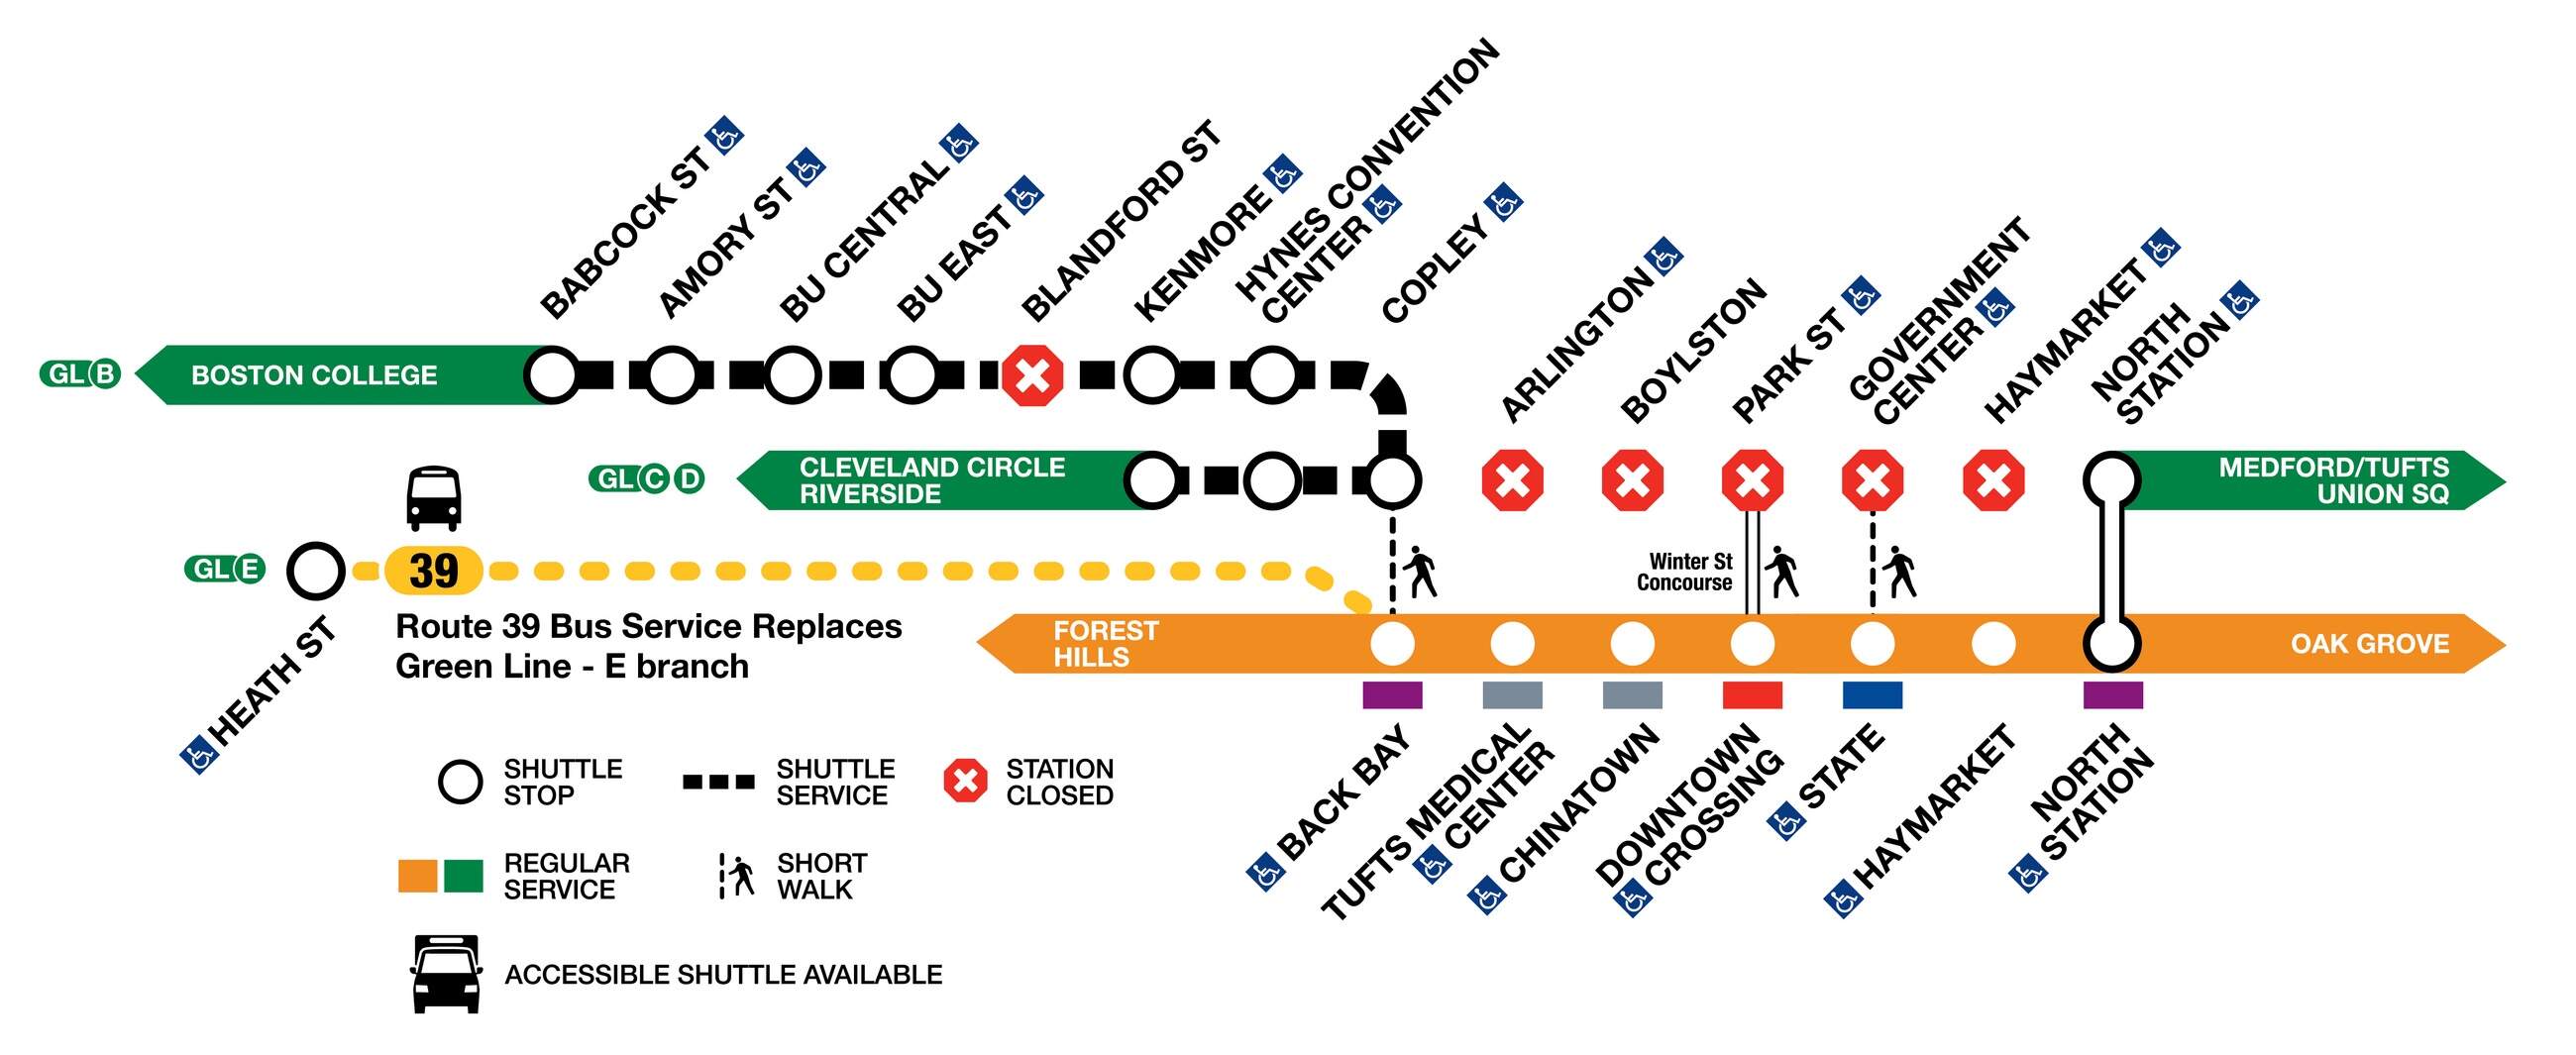 January 2024 Green Line closures. (Image courtesy of the MBTA)